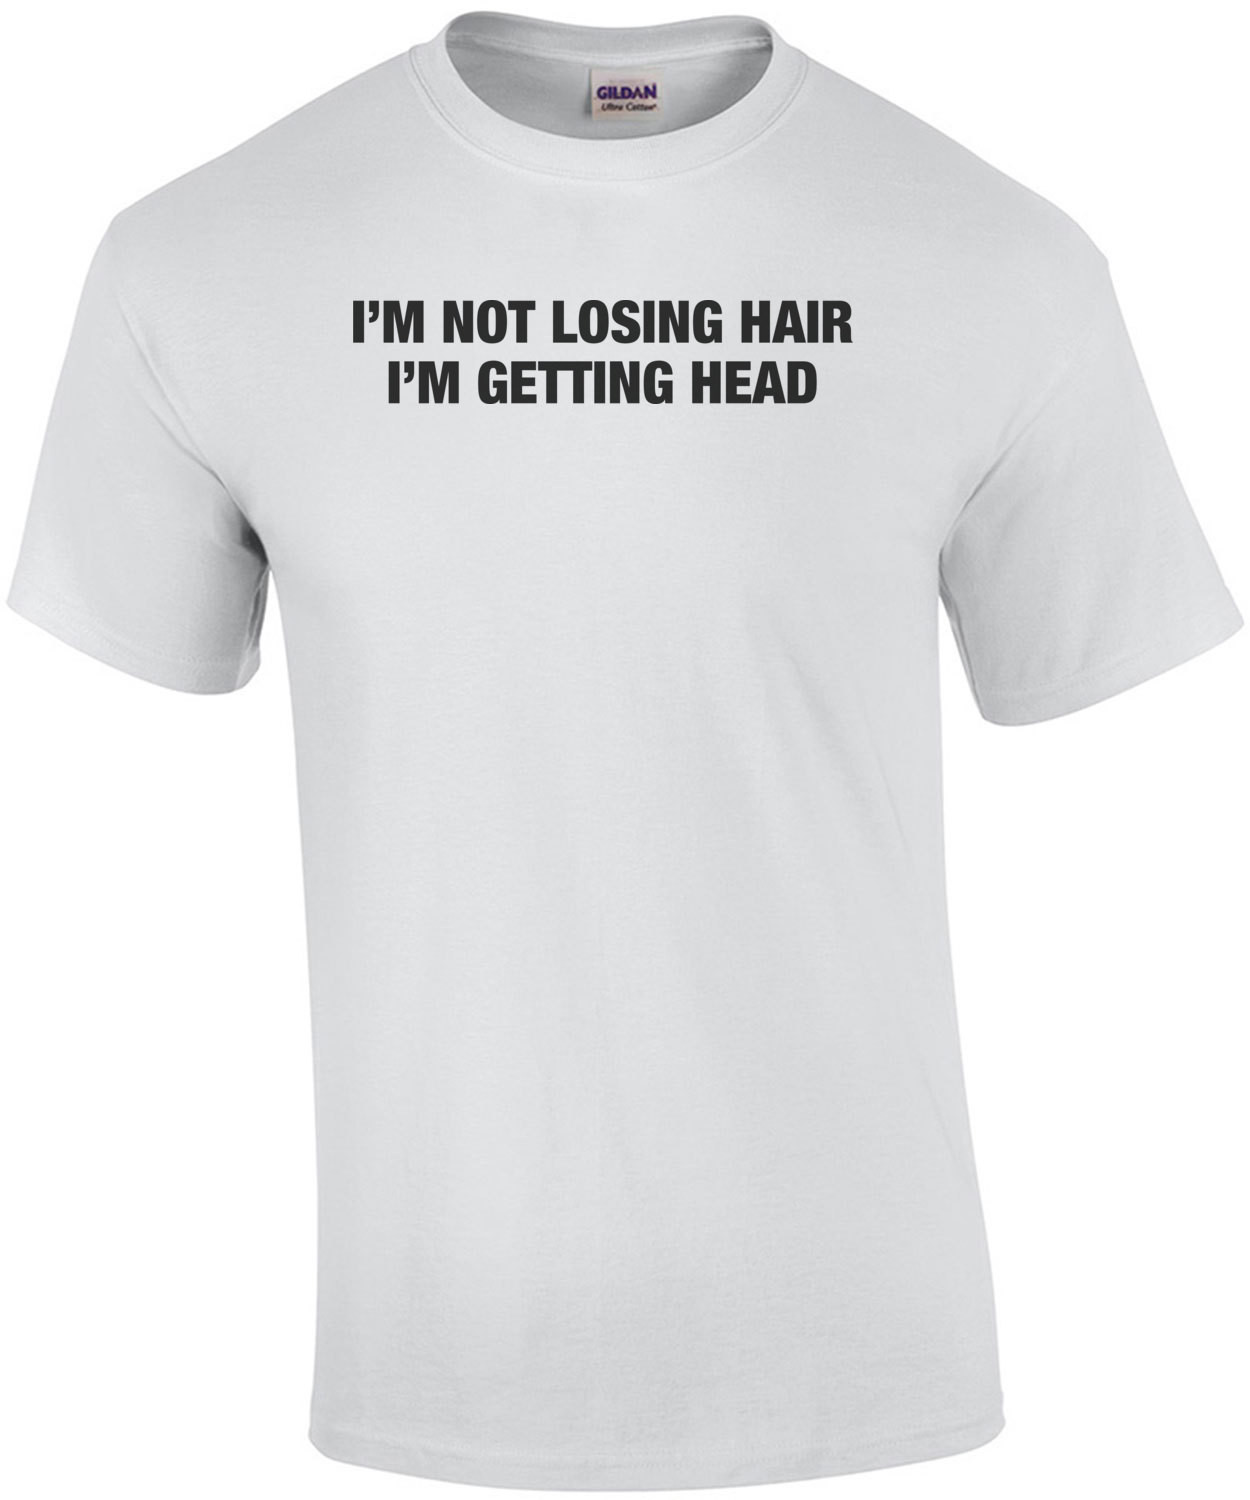 I'm not losing hair. I'm getting head. Funny Bald T-Shirt.